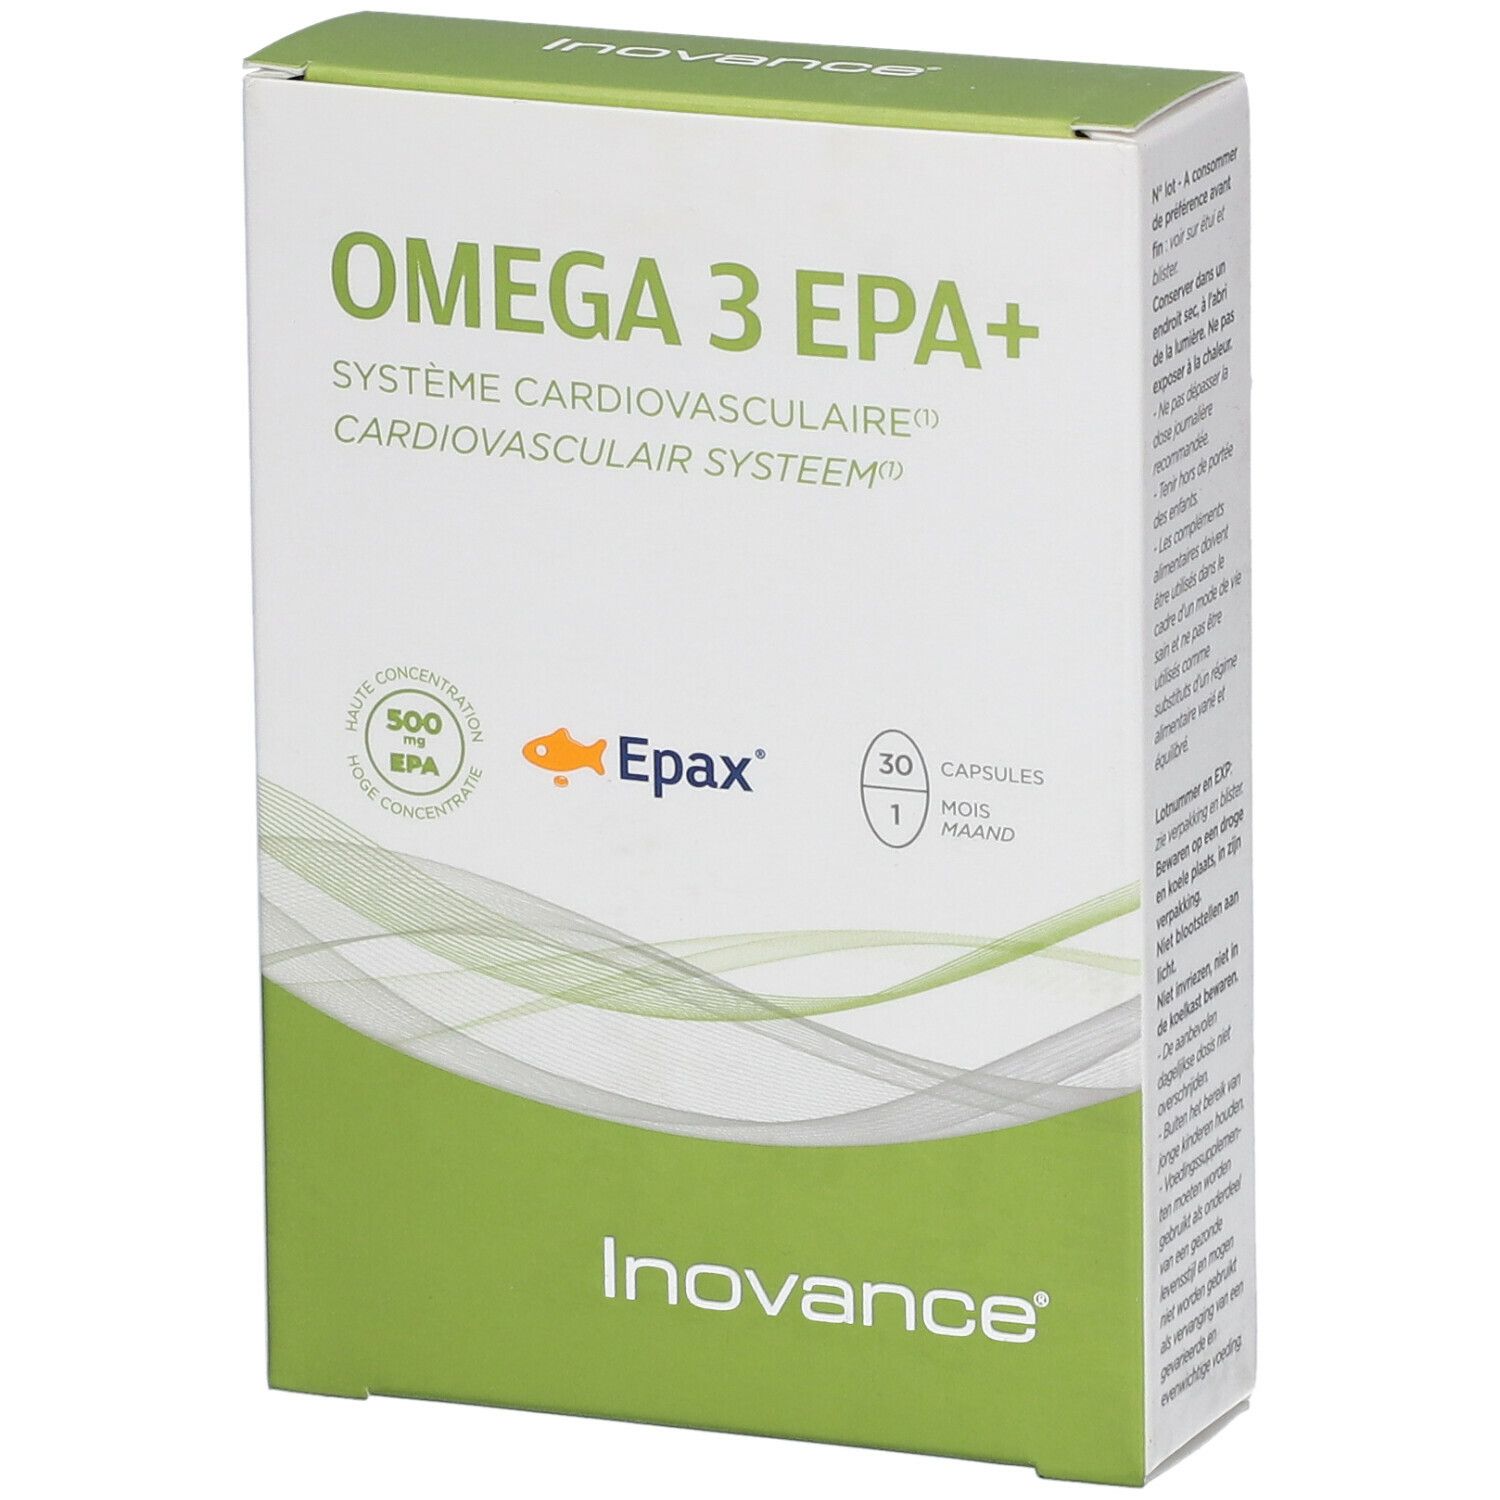 Inovance® Omega 3 Epa+